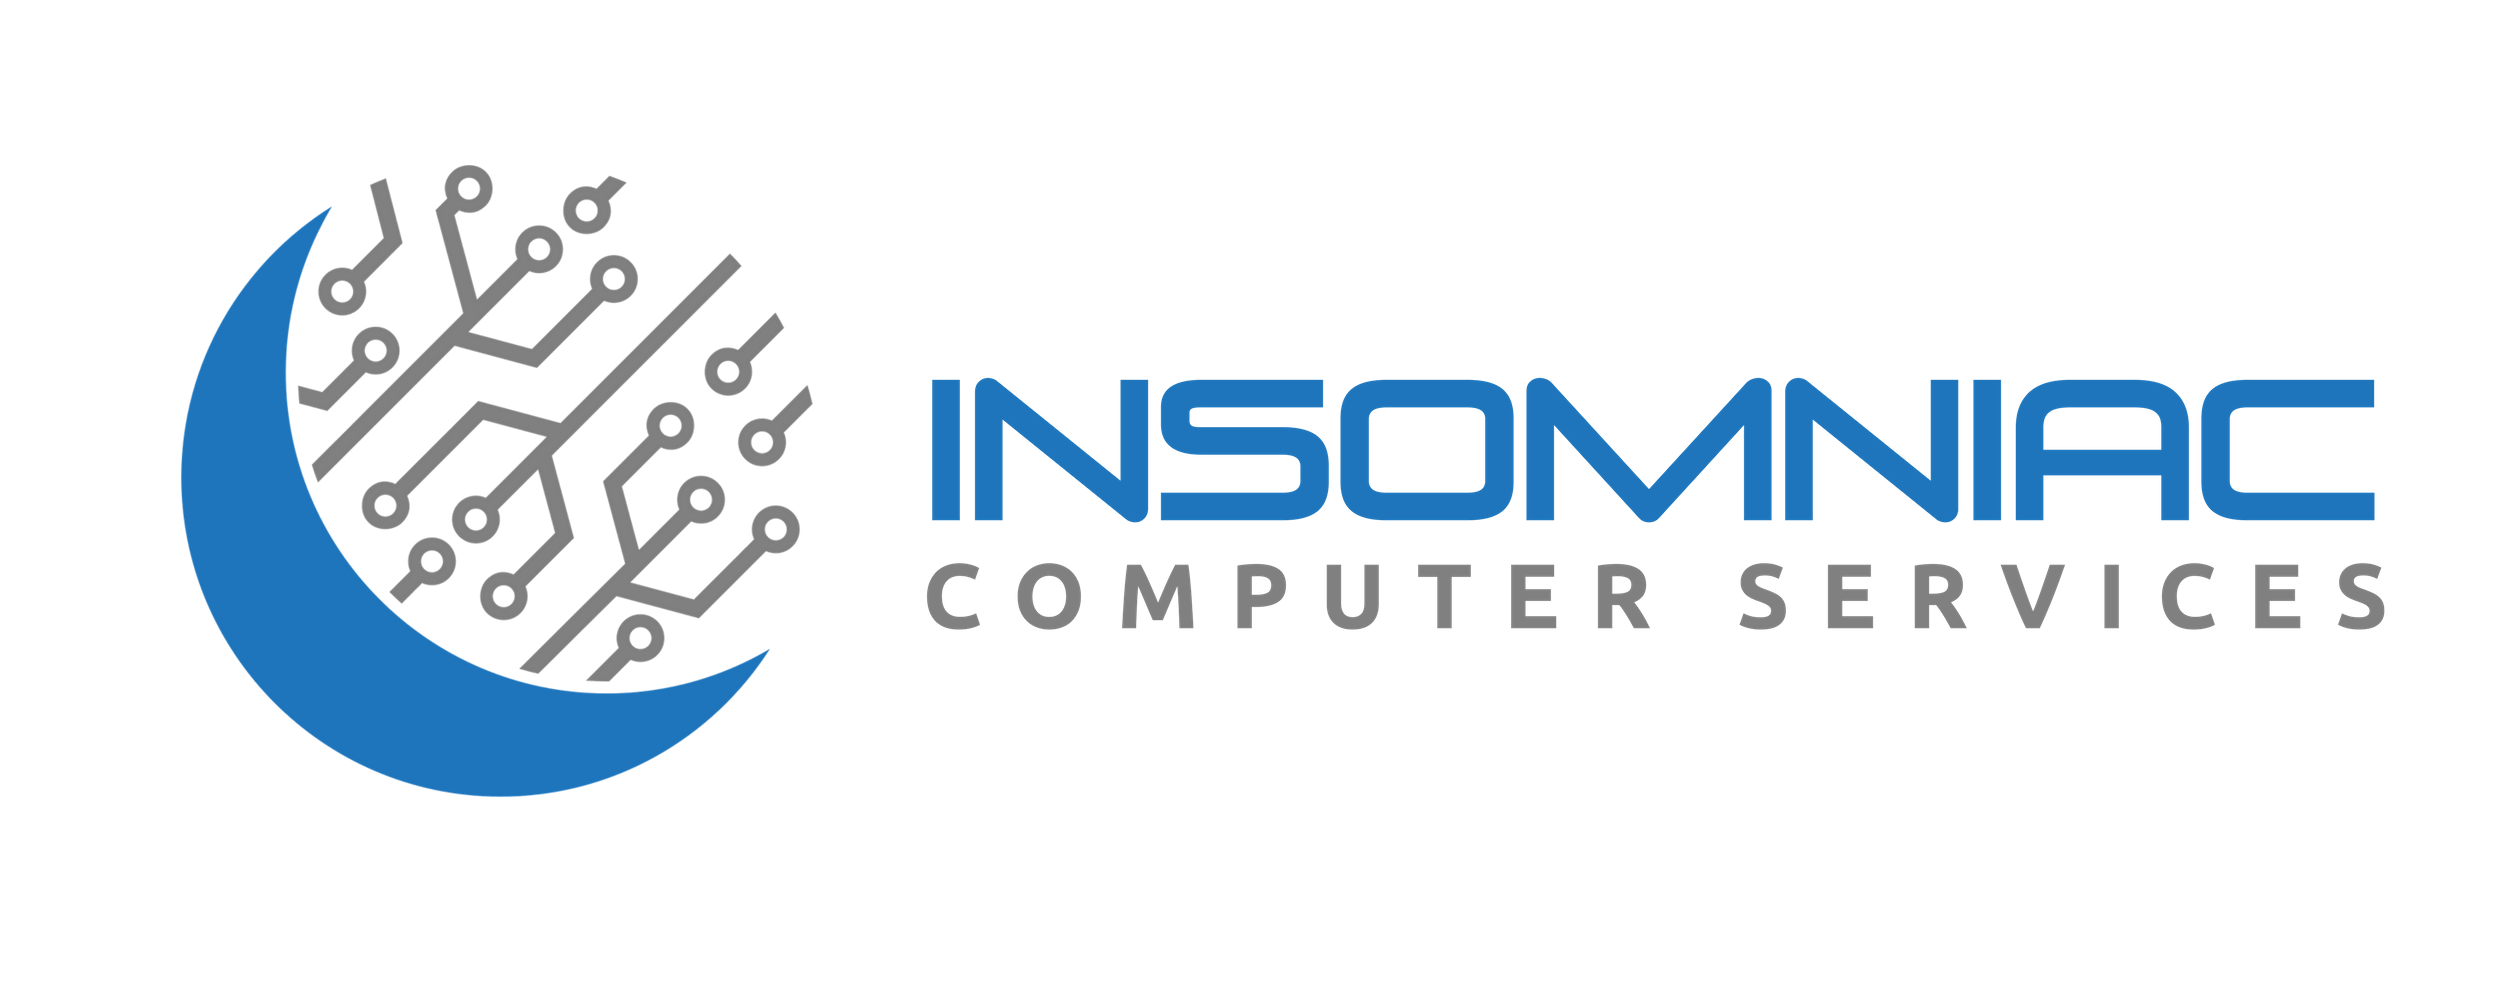 Insomniac Computer Services